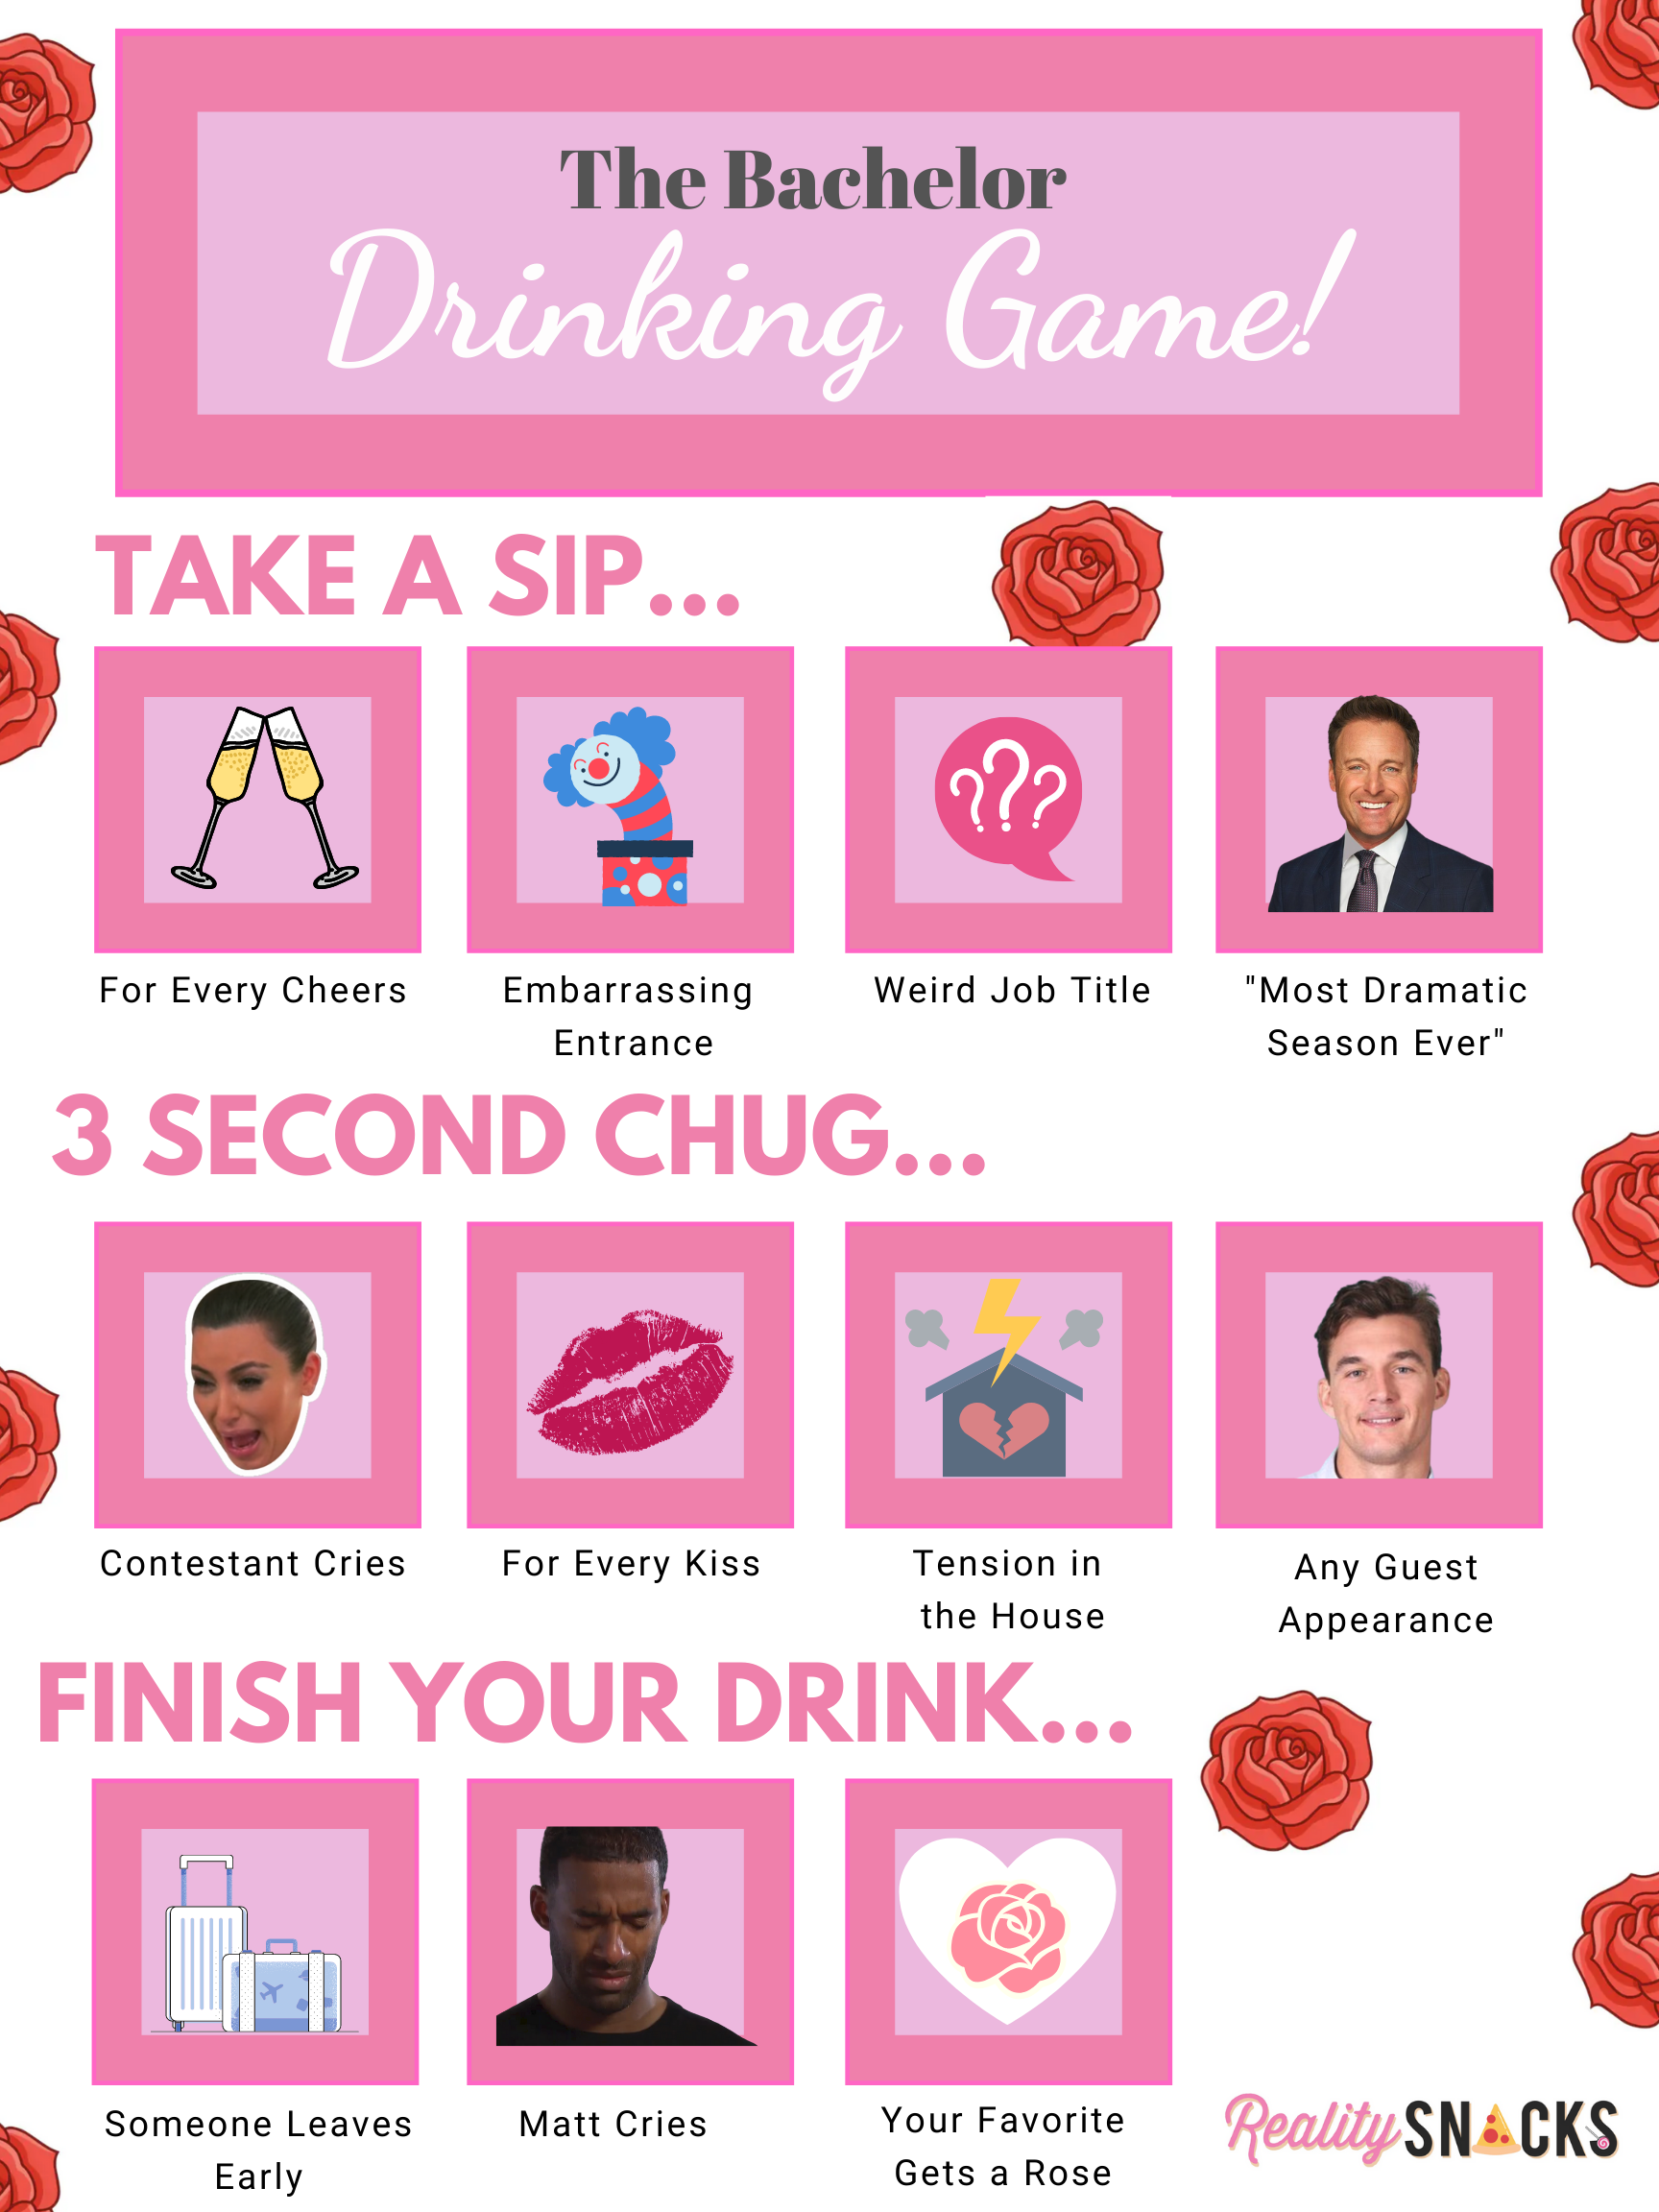 The Bachelor Drinking Game Season 25, Episode 1 Reality